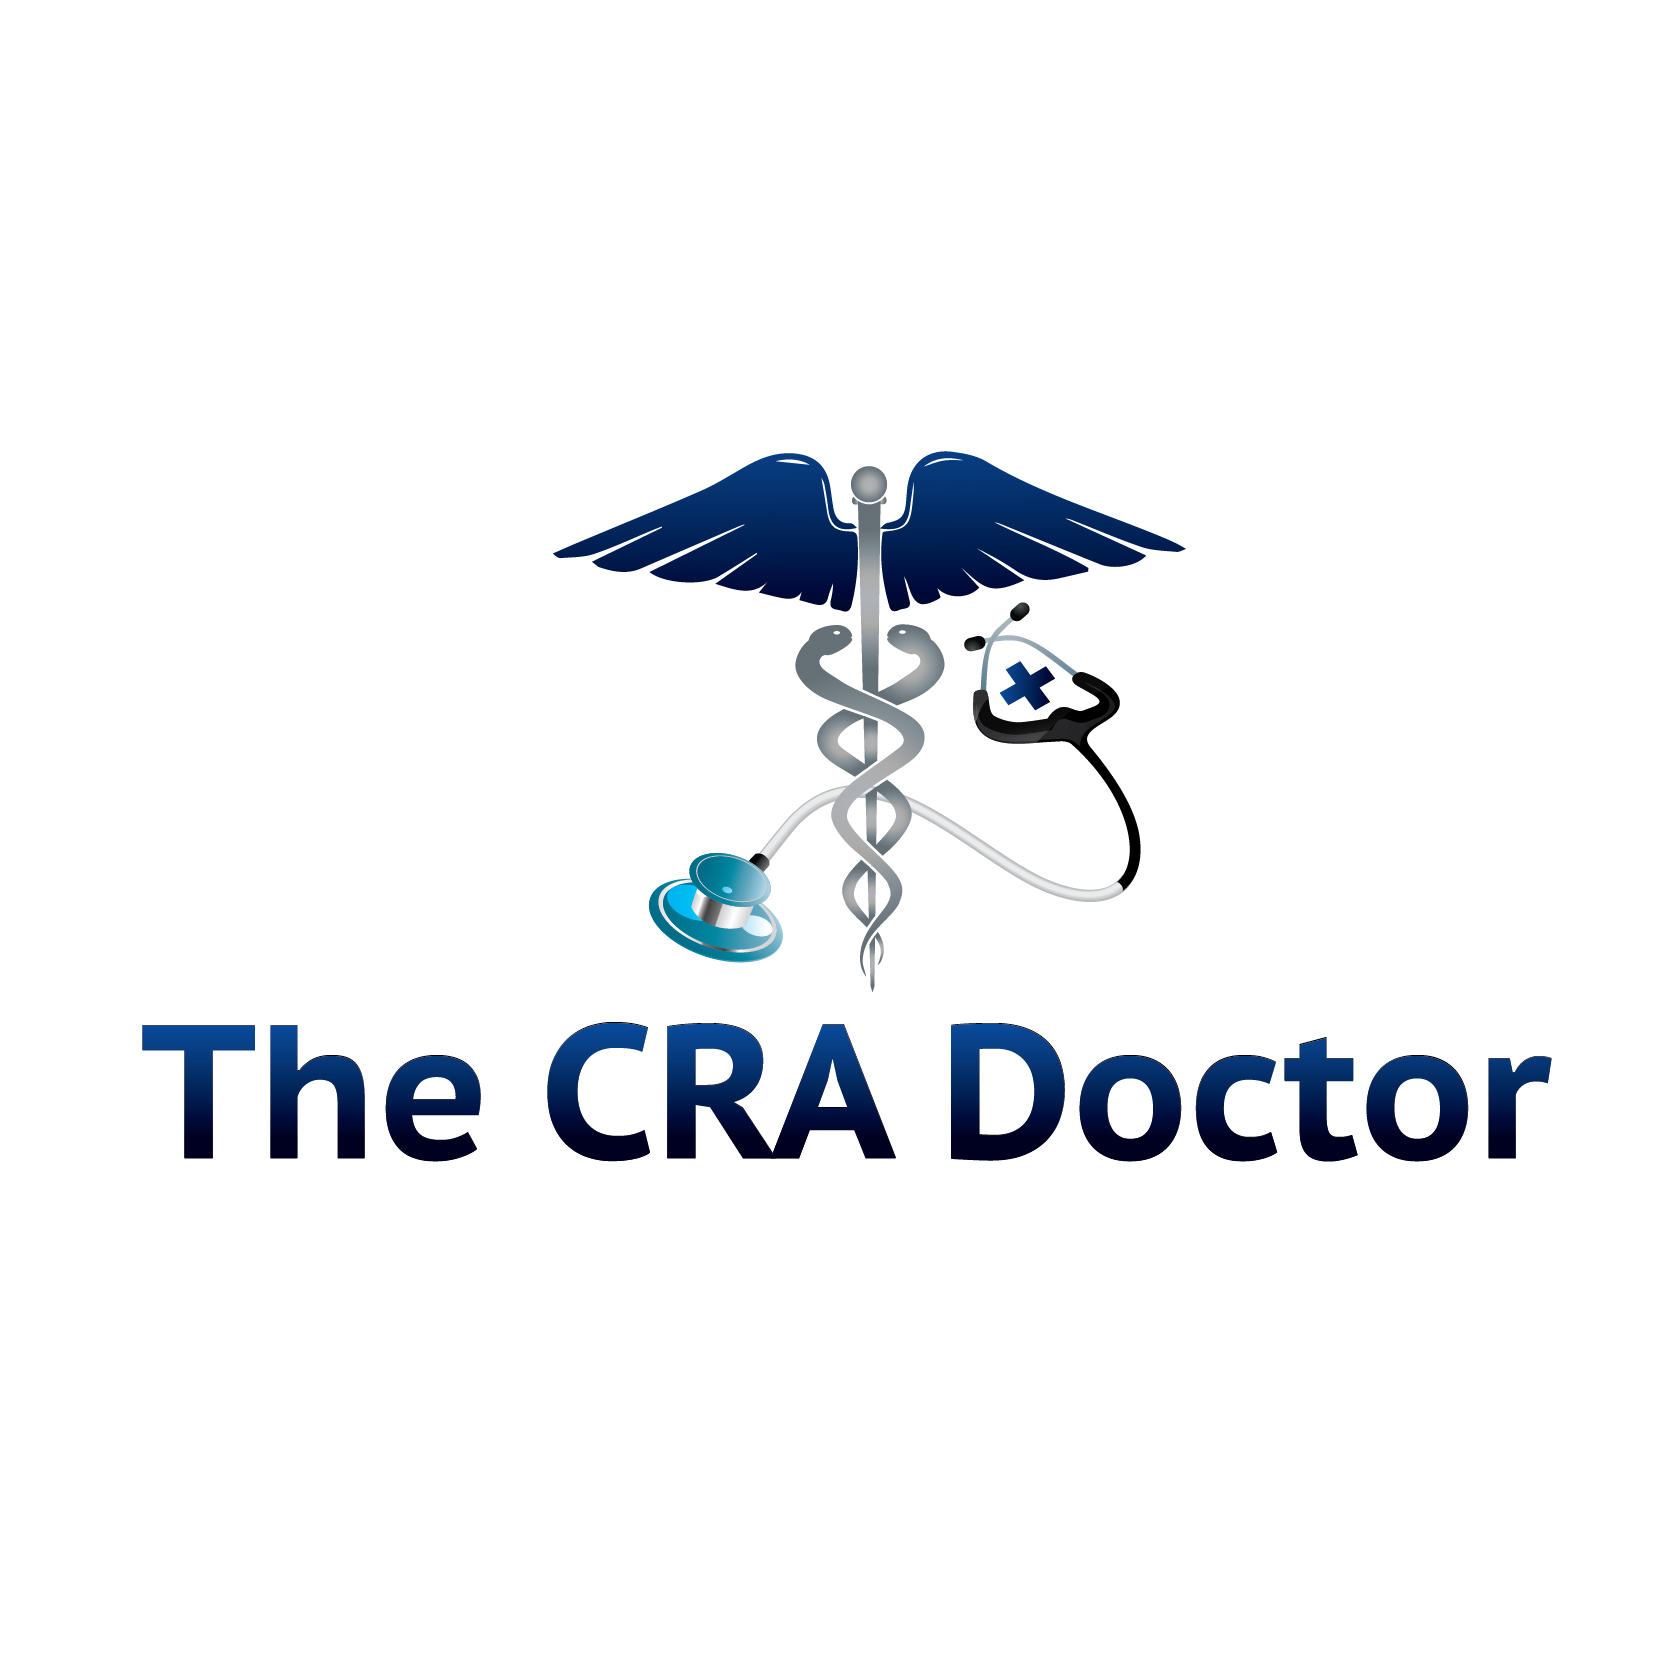 The CRA Doctor logo